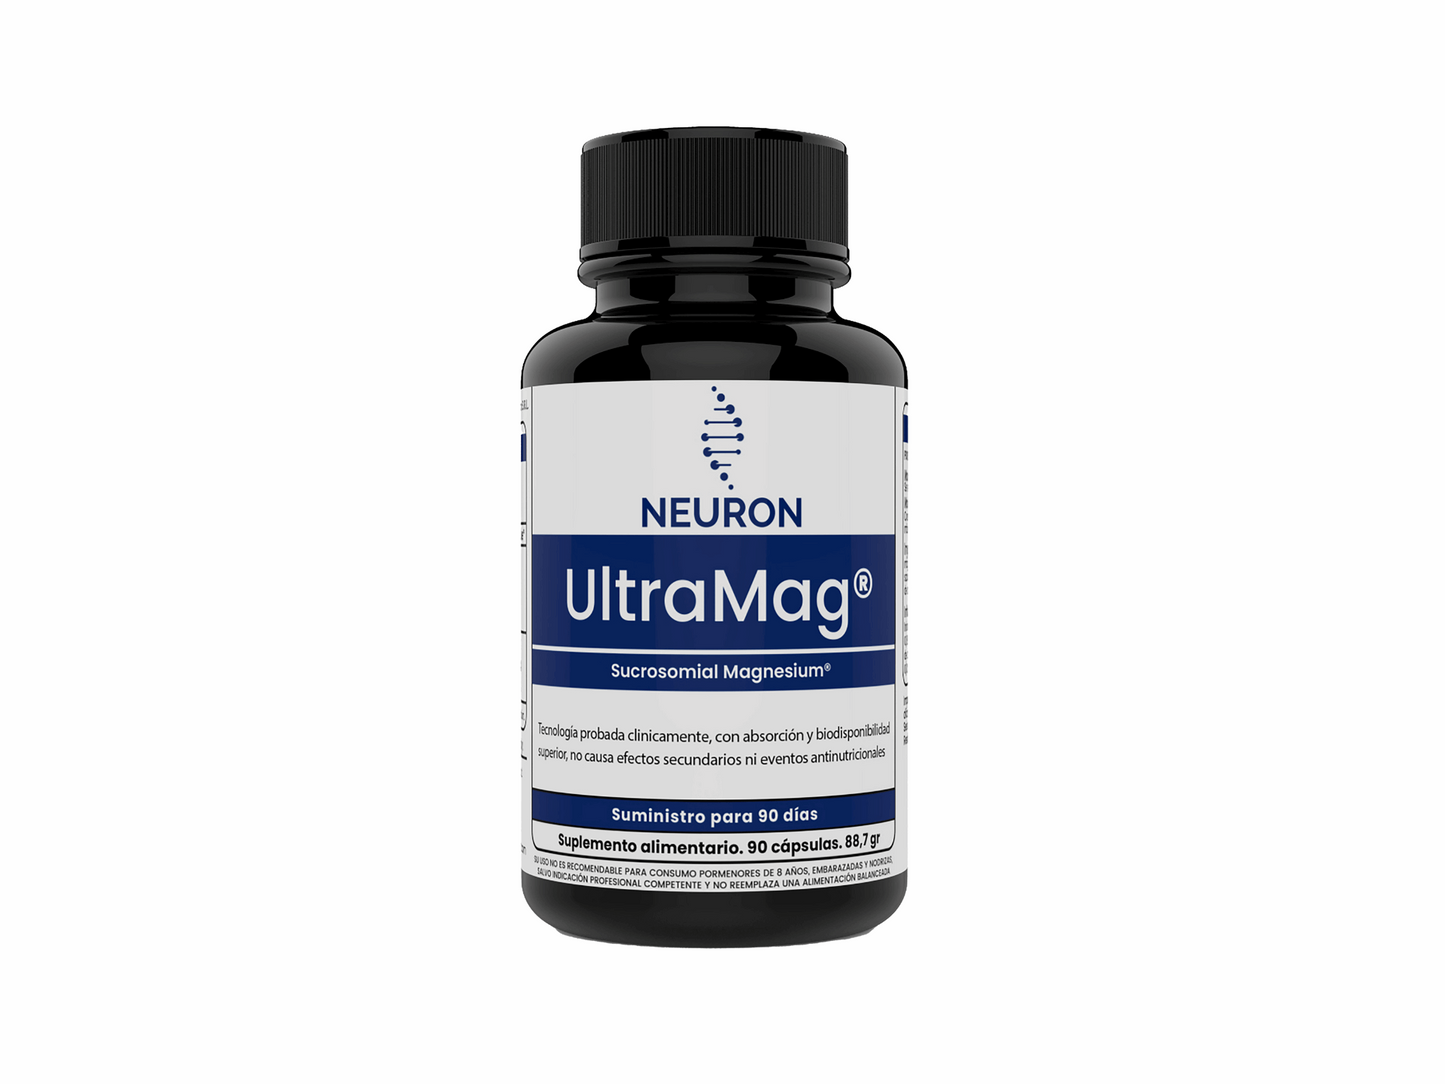 Ultramag-magnesio sucrosomial